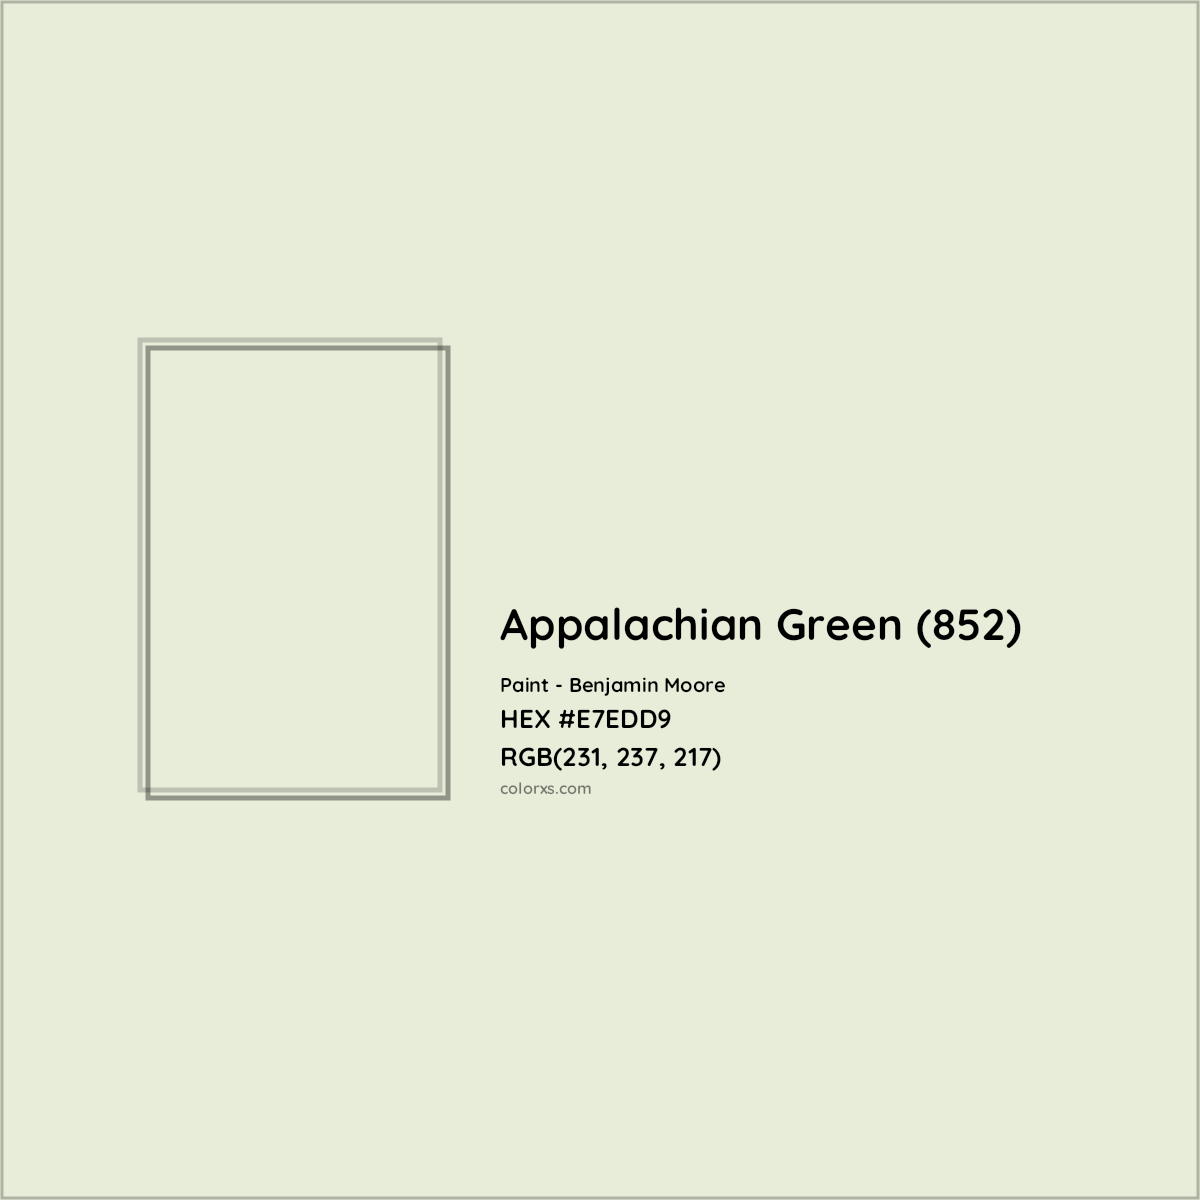 HEX #E7EDD9 Appalachian Green (852) Paint Benjamin Moore - Color Code